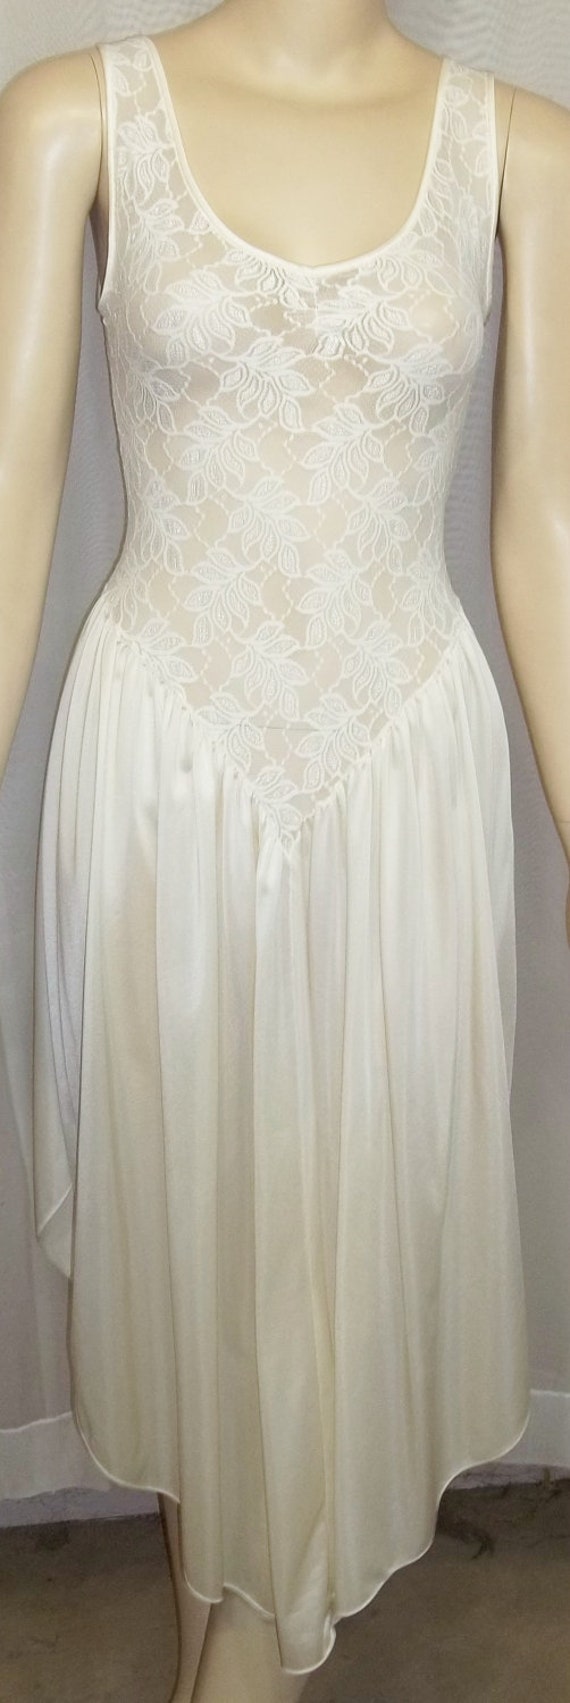 Vintage Cream Nylon Nightie Nightgown Lace Small by ShonnasVintage